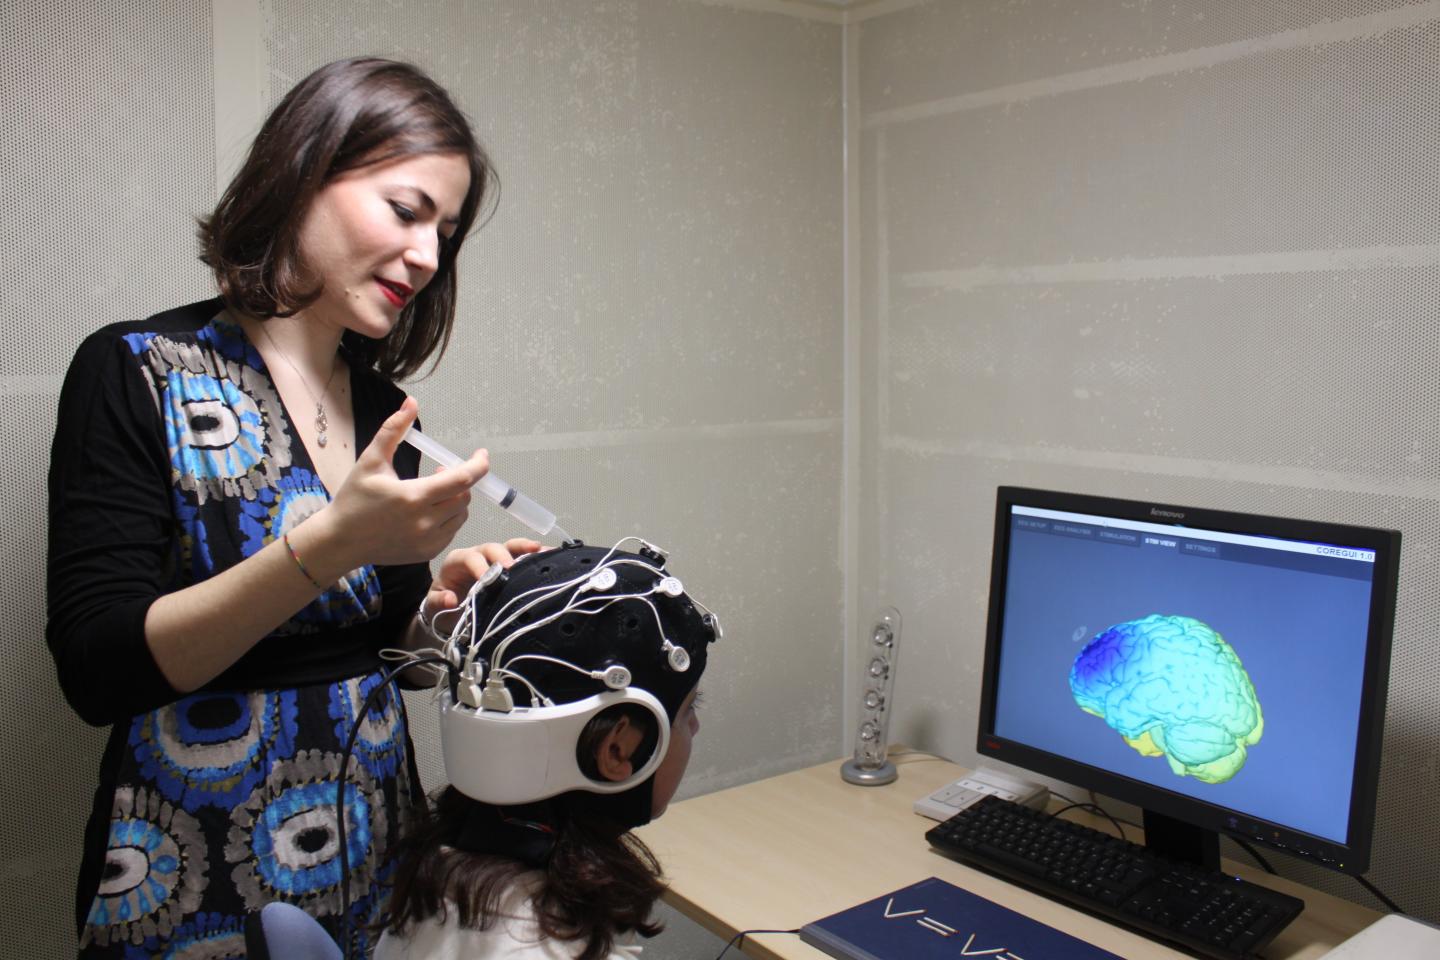 Scientists Improve People's Creativity through Electrical Brain Stimulation